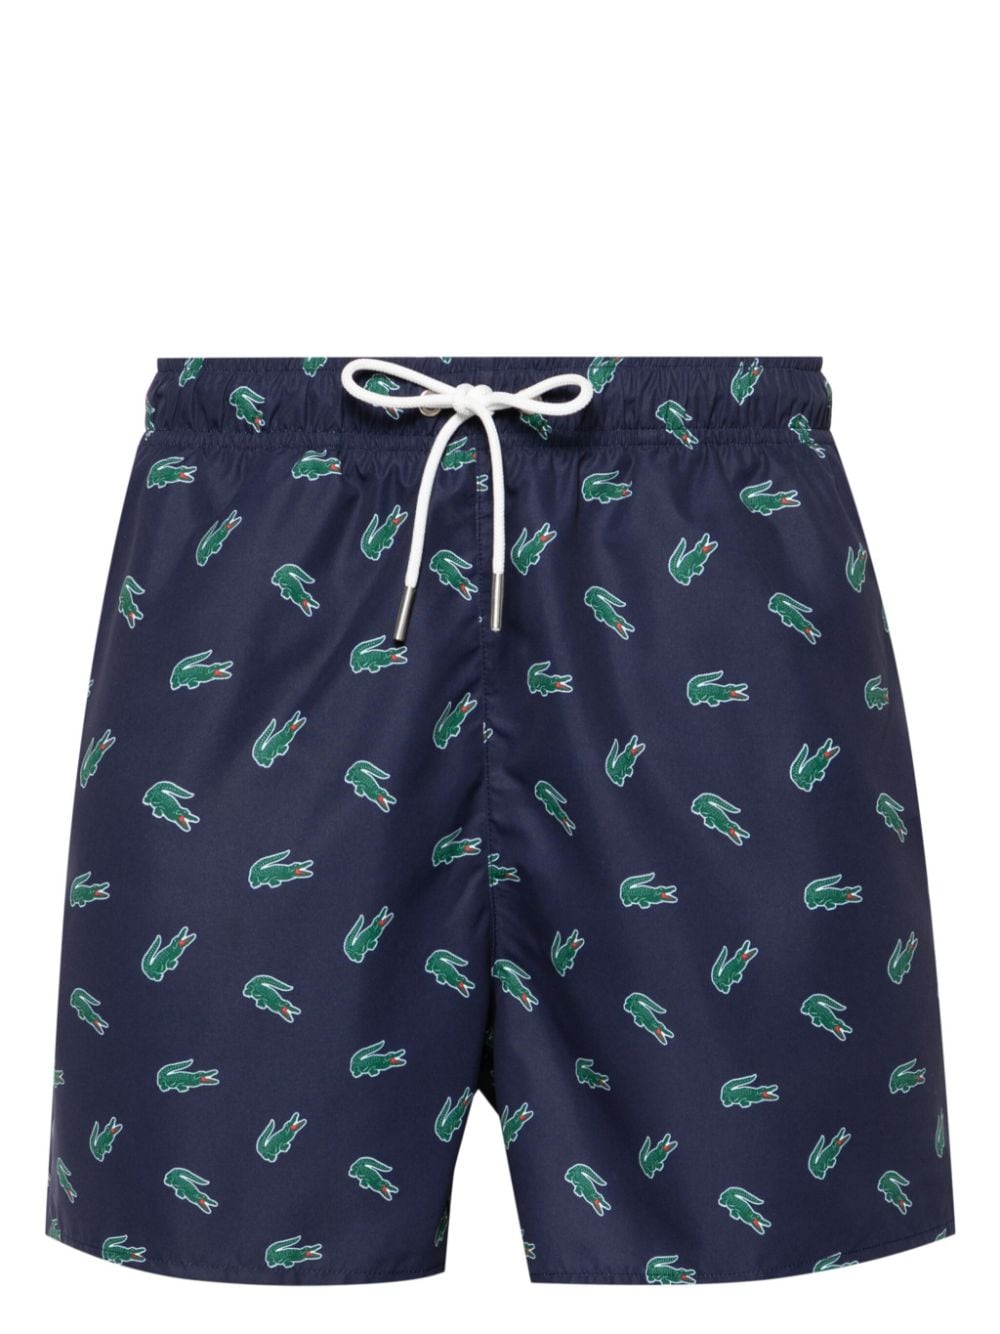 Blue Crocodile-print drawstring swim shorts<BR/><BR/>